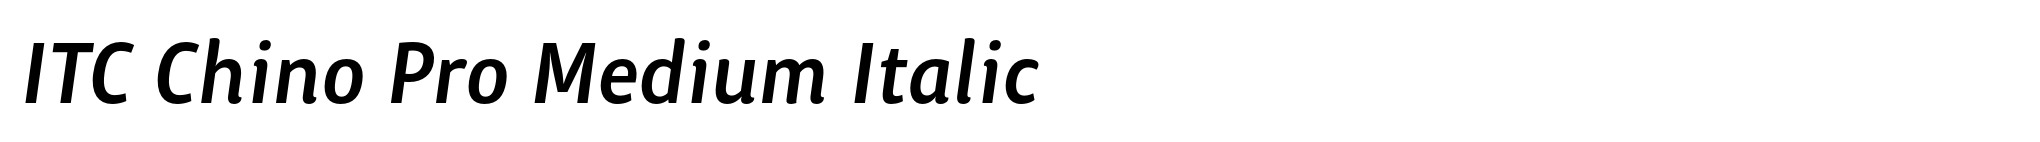 ITC Chino Pro Medium Italic image